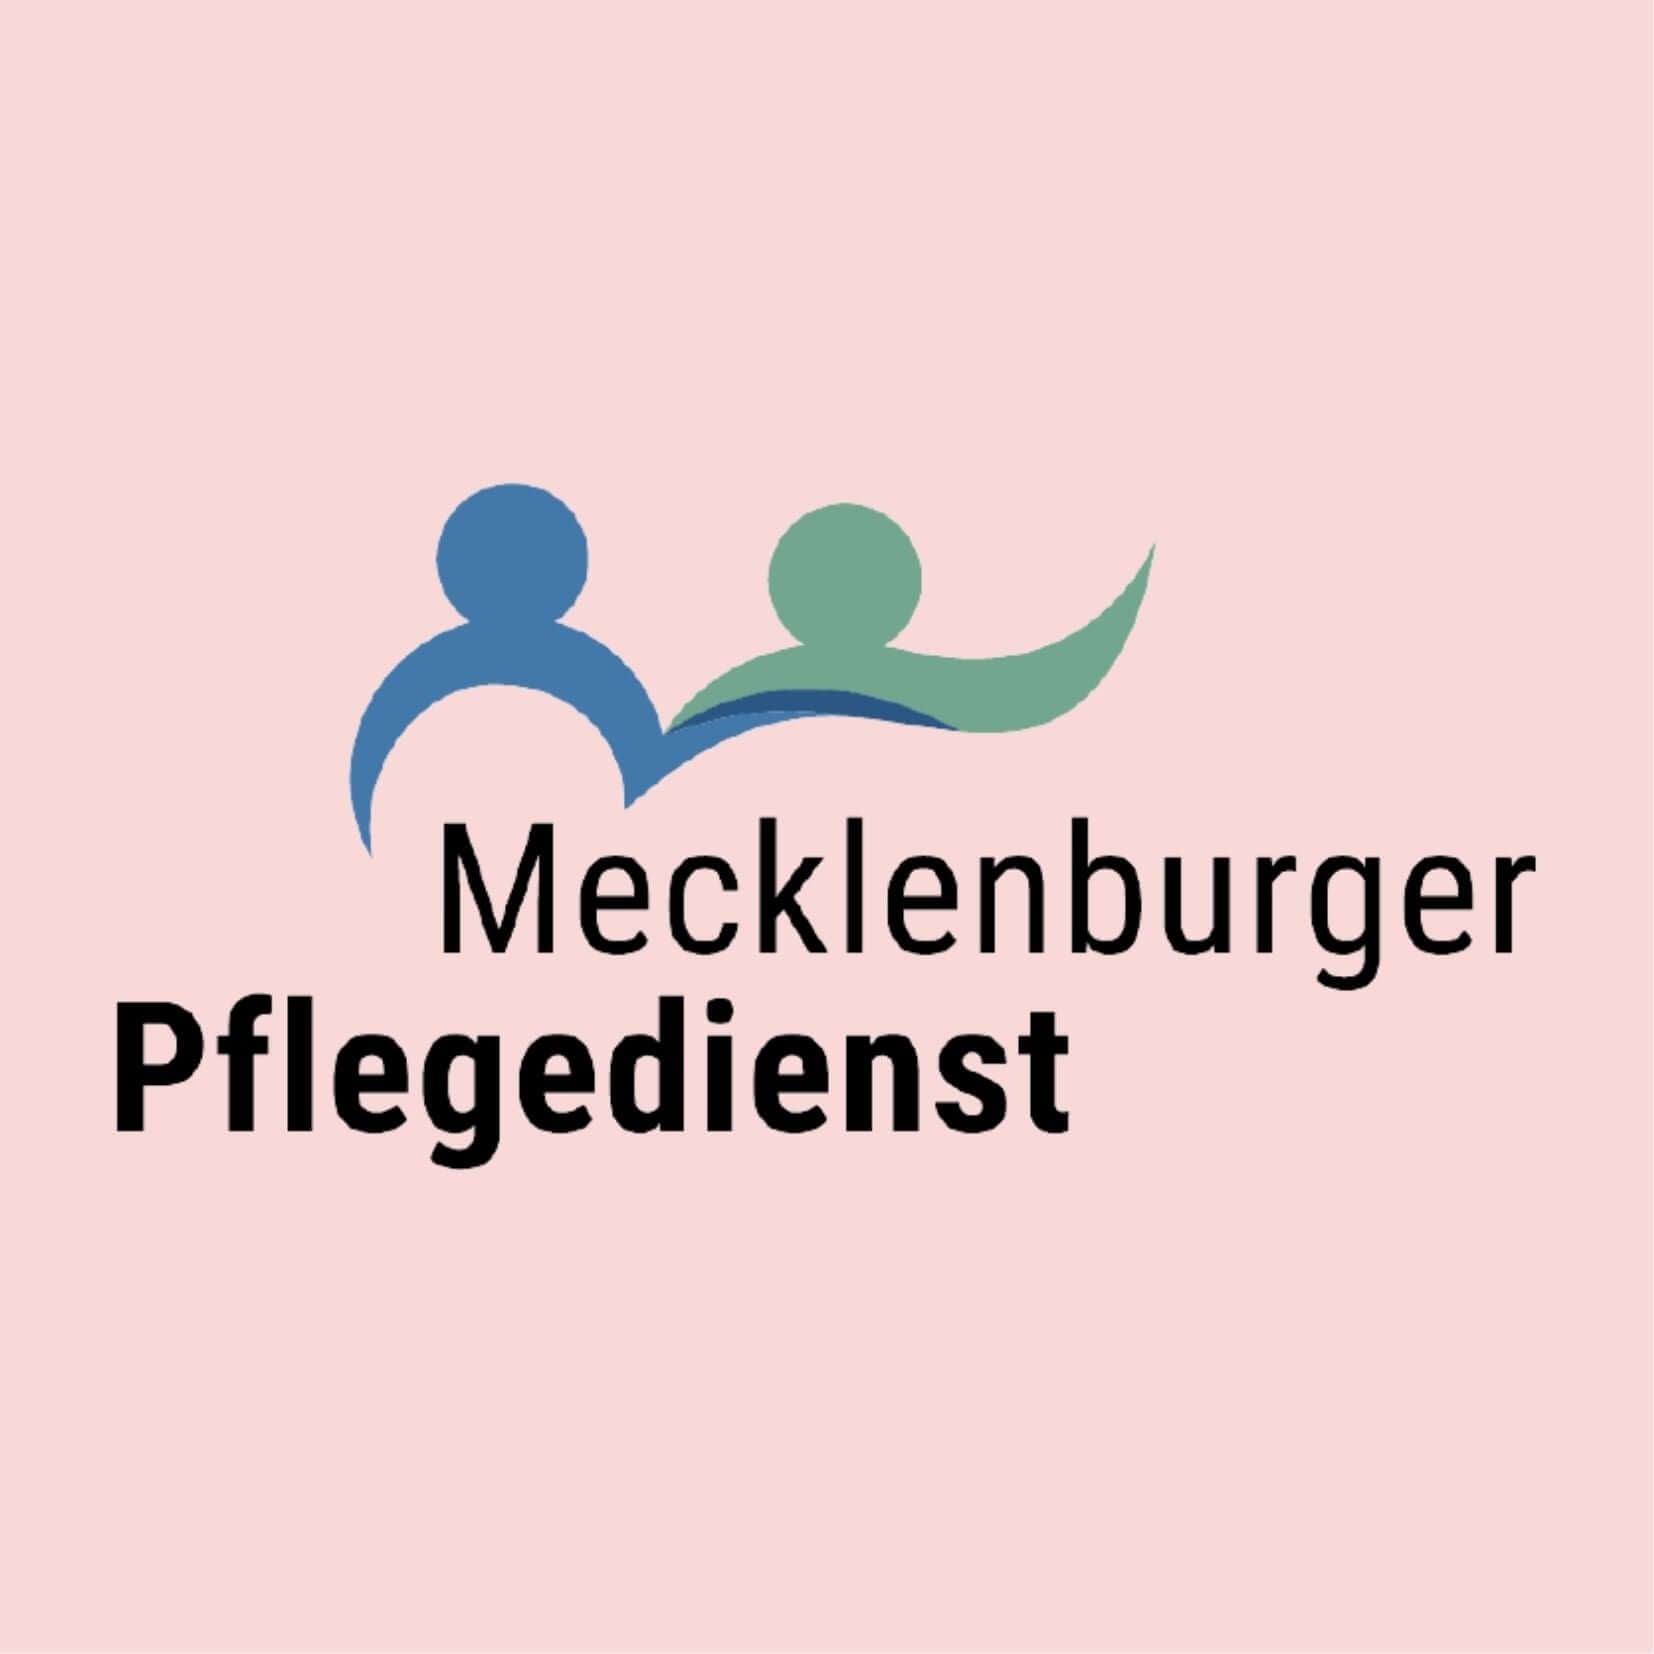 Mecklenburger Pflegedienst (Dalberg)